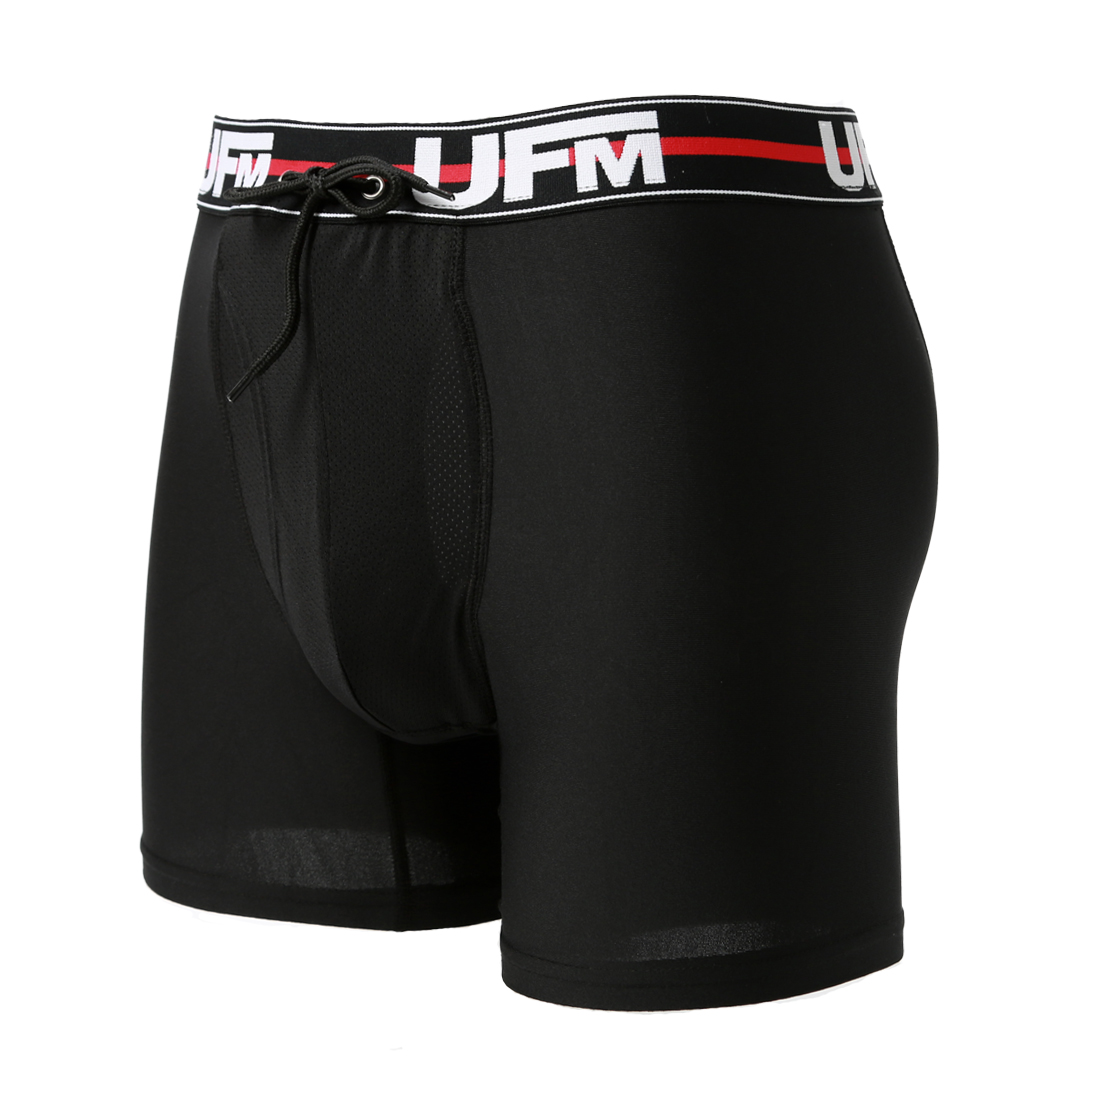 Parent UFM Underwear for Men Everyday Polyester 6 inch Original Max Boxer Brief Black 800